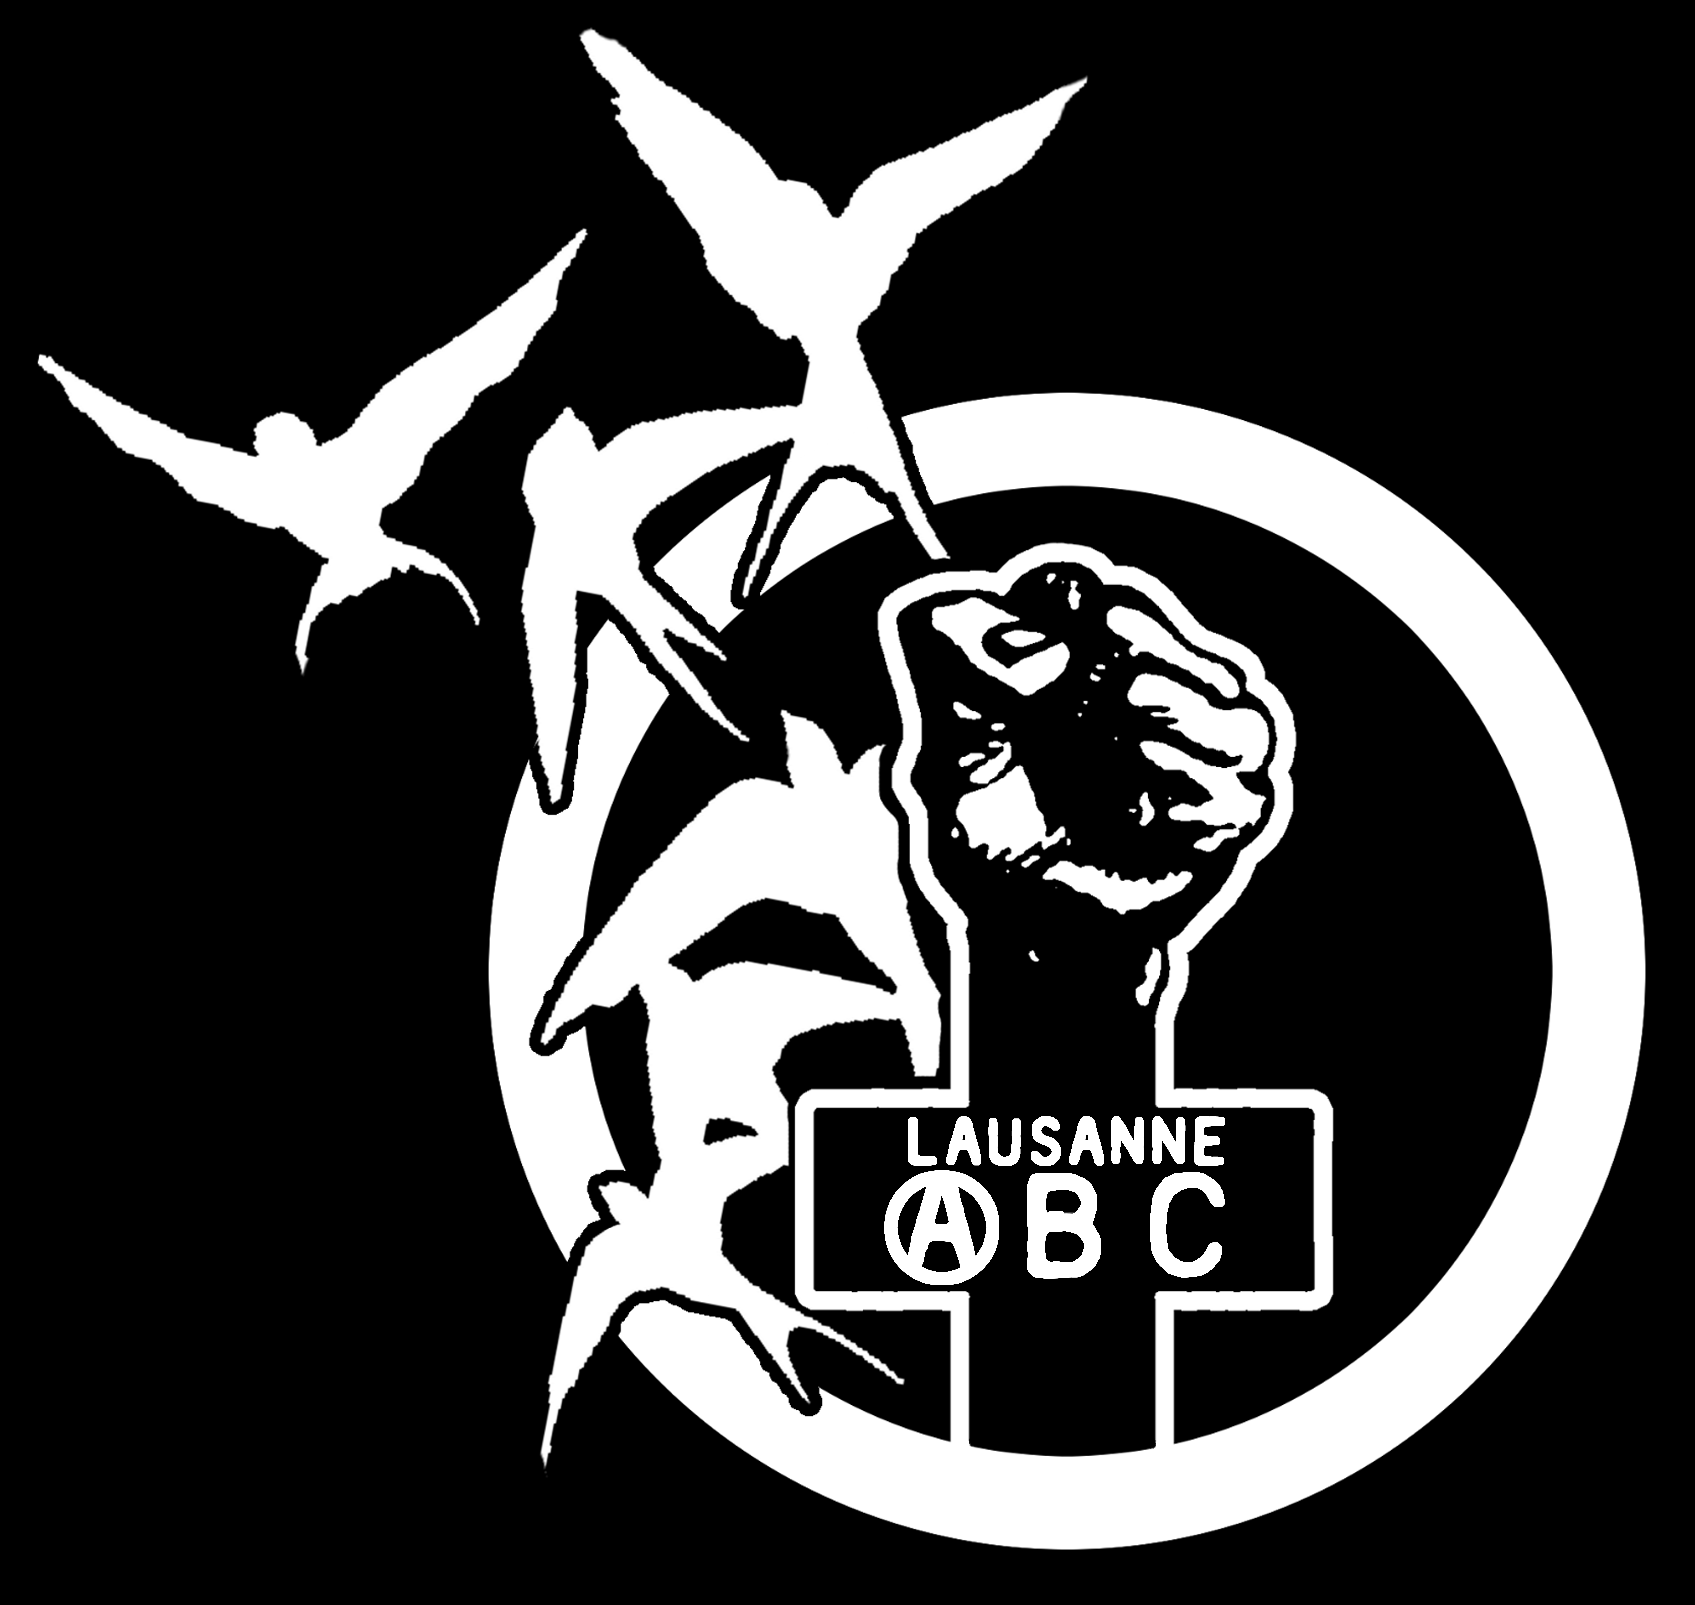 ABC White Cross Logo - ABC Lausanne